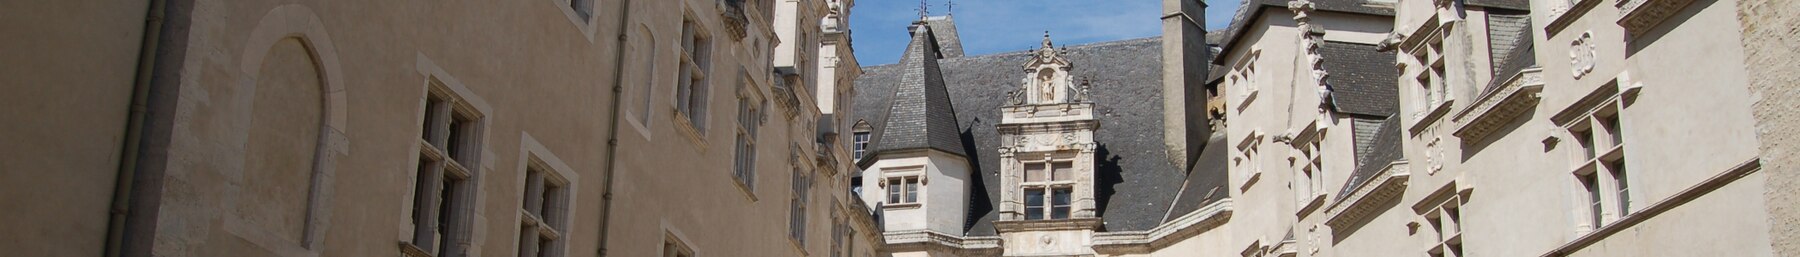 Pau banner Château de Pau.jpg